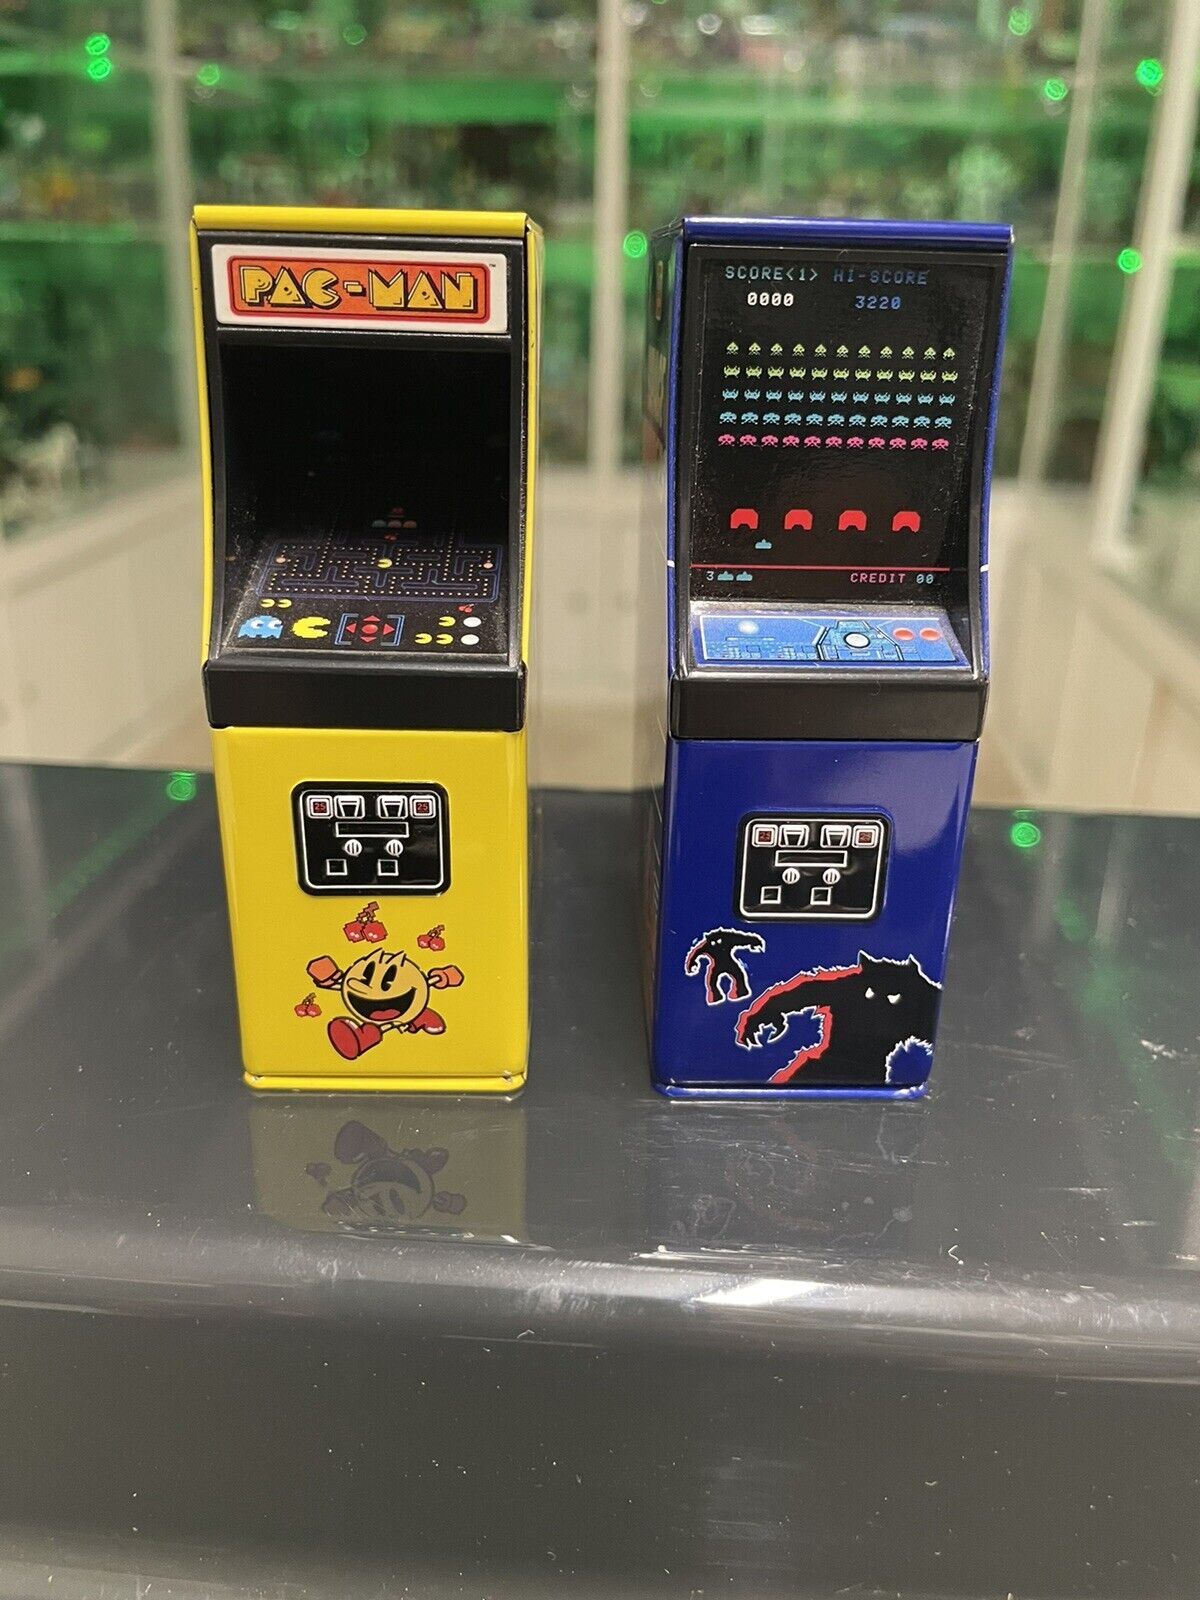 Scatole-caramelle-mentine-Videogames-Videogiochi-Pacman-Space-Invaders-144804910933-2